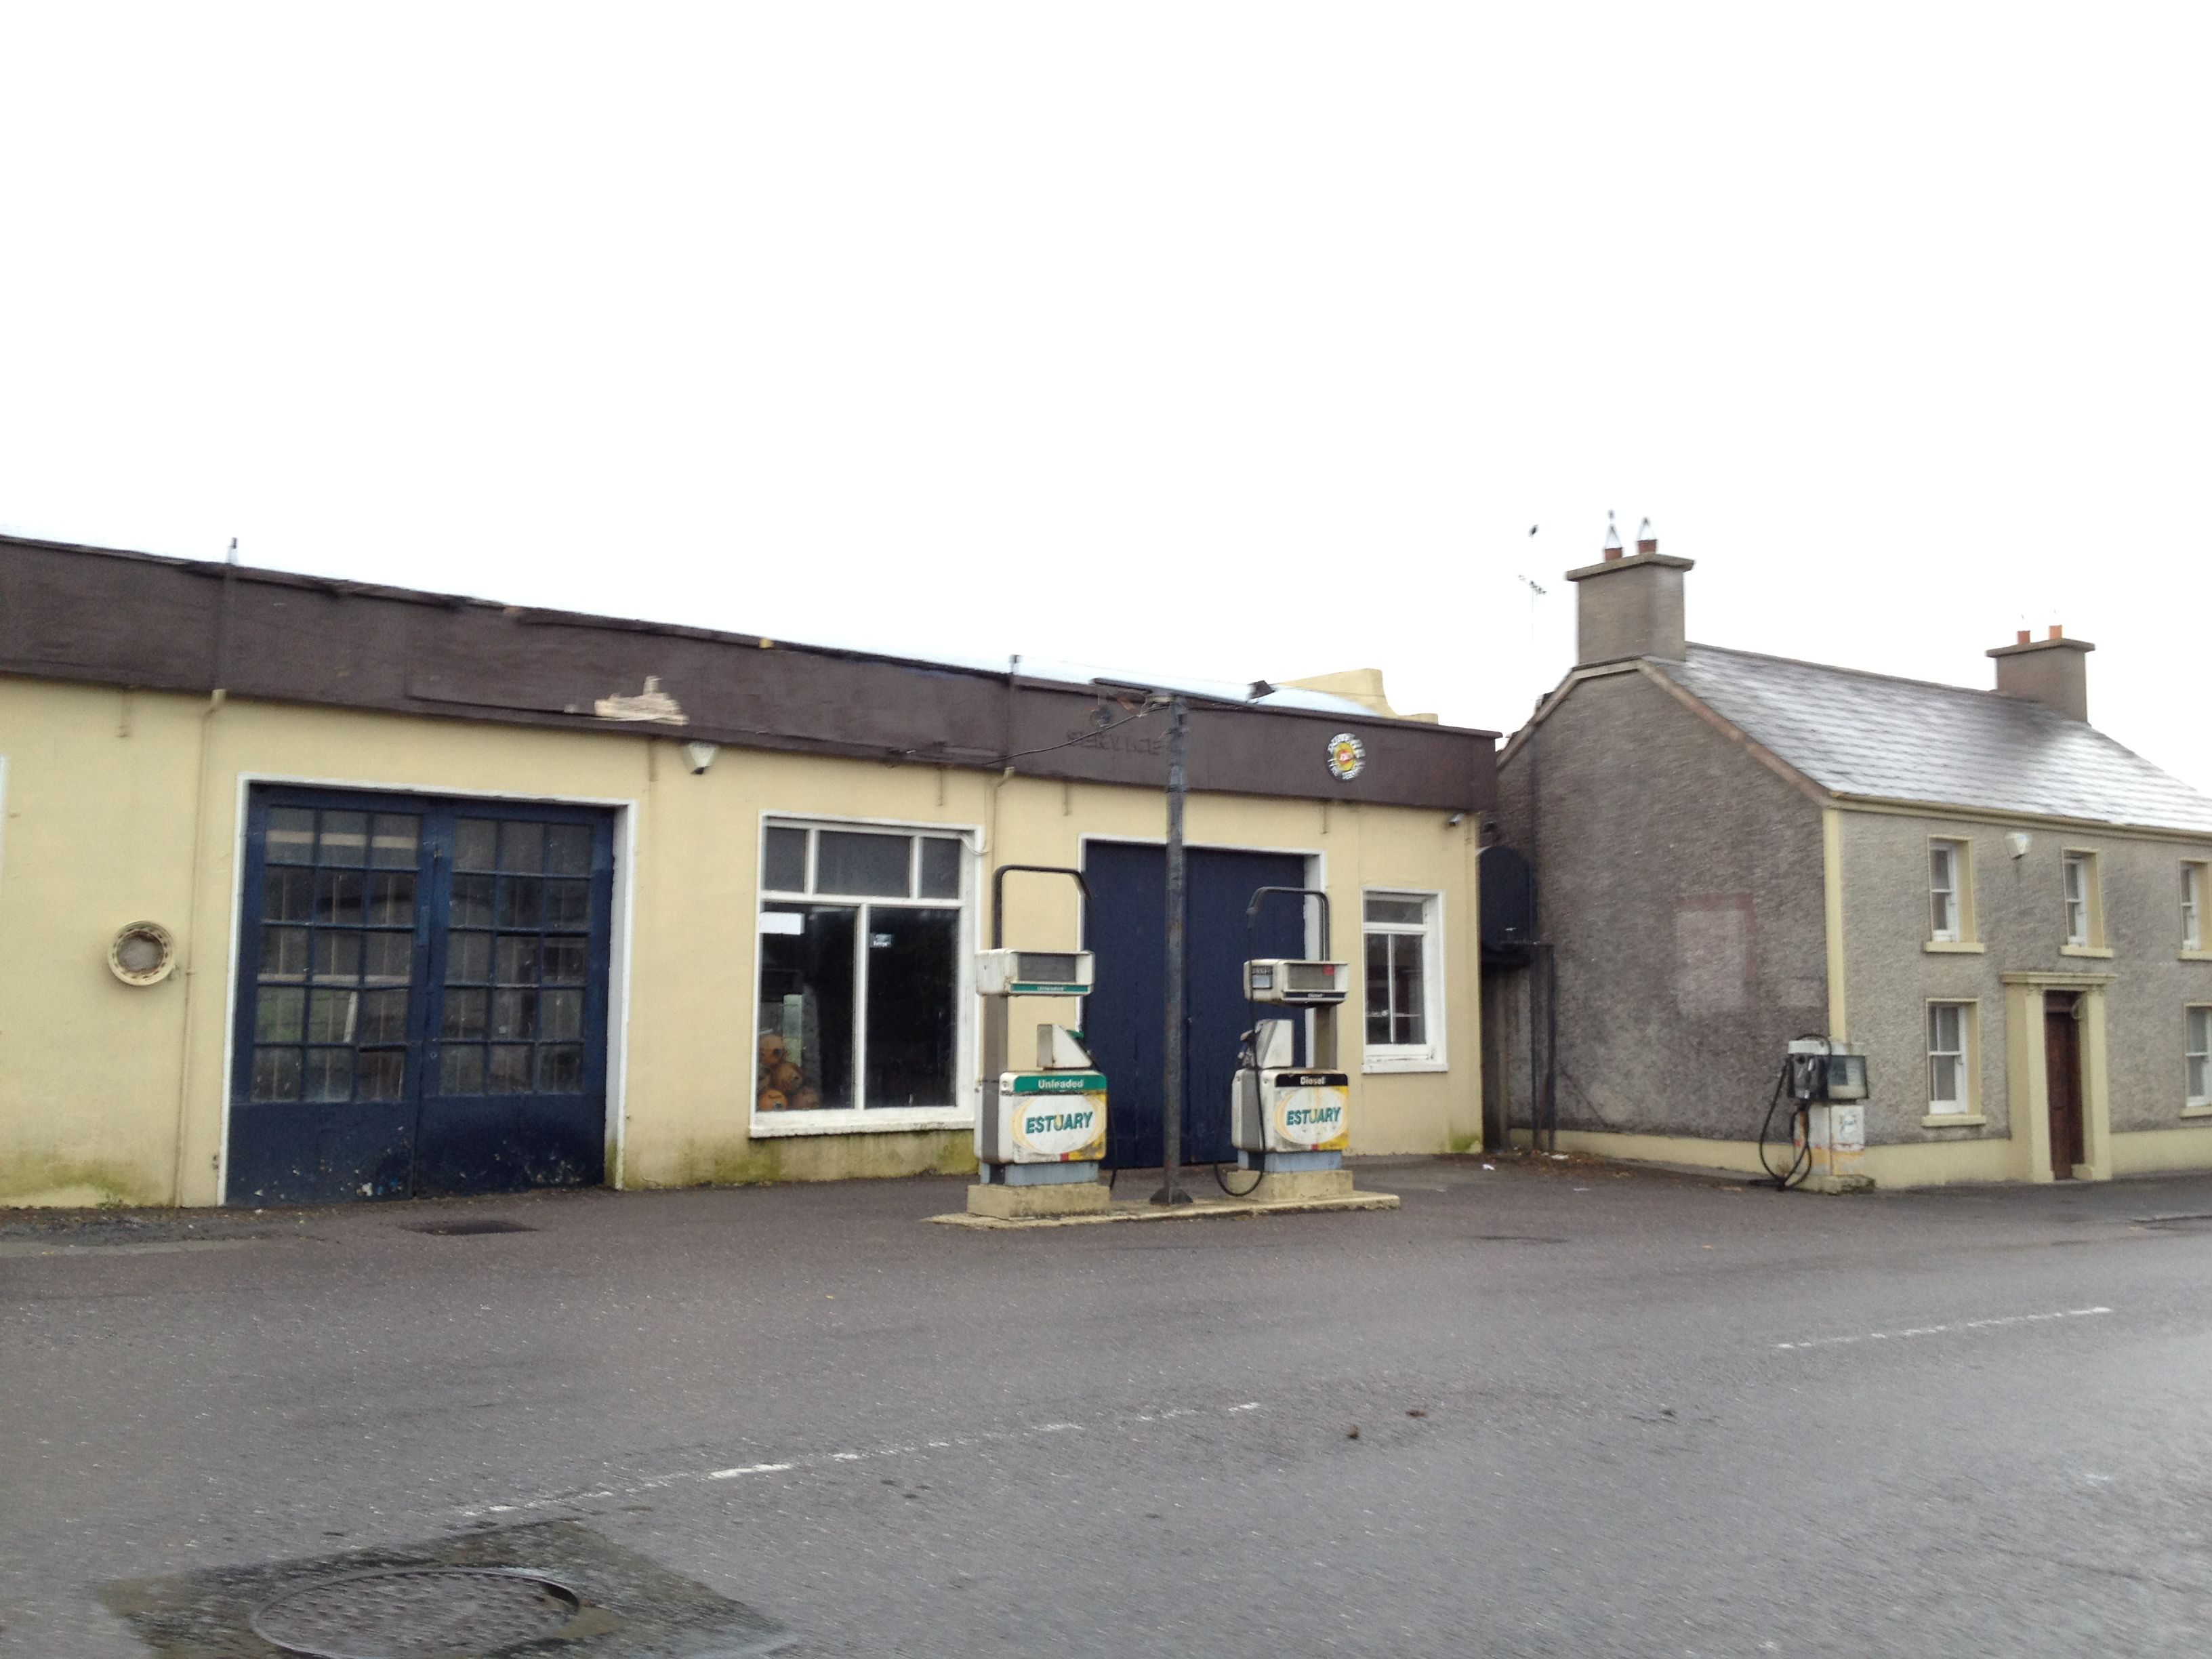 Old petrol station .Ireland | Old pumps | Pinterest